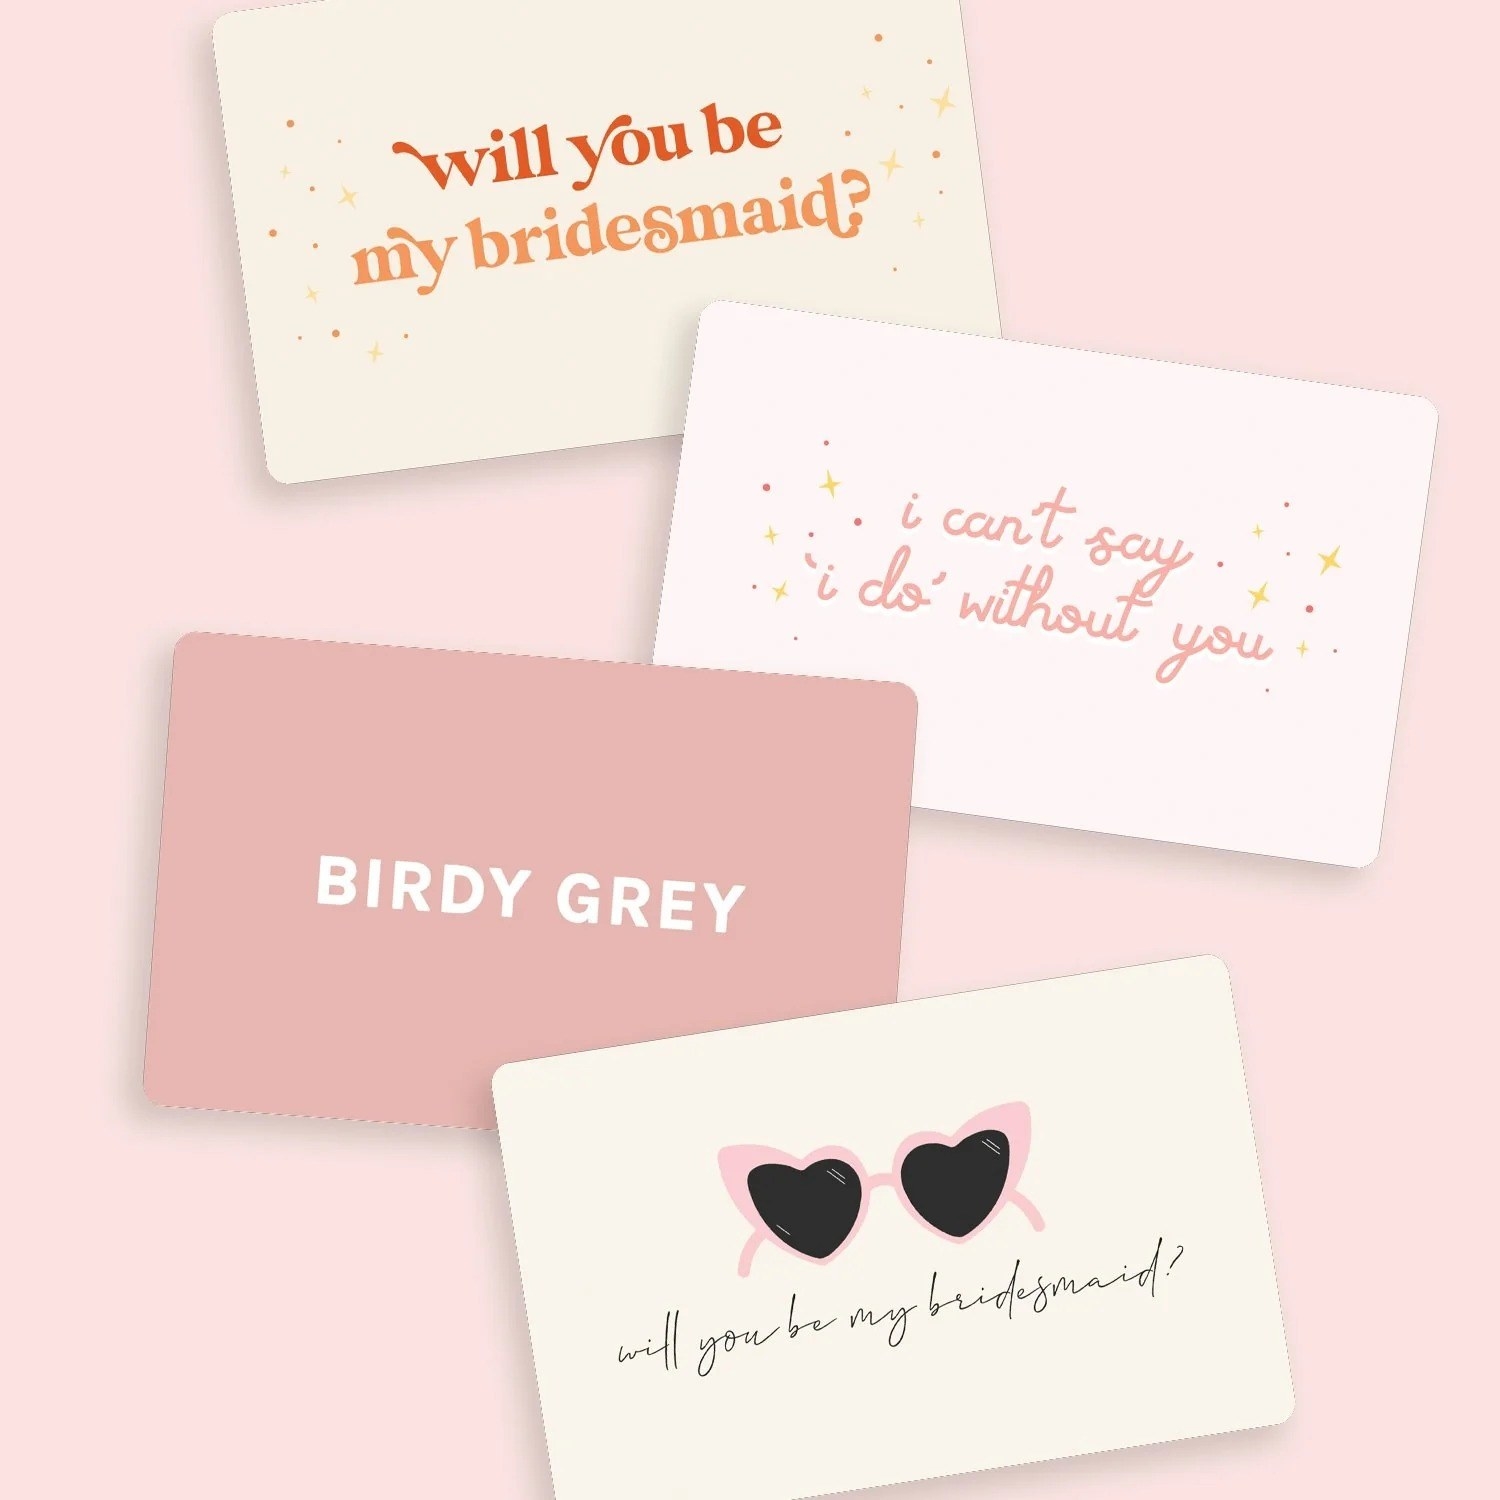 birdy grey gift cards